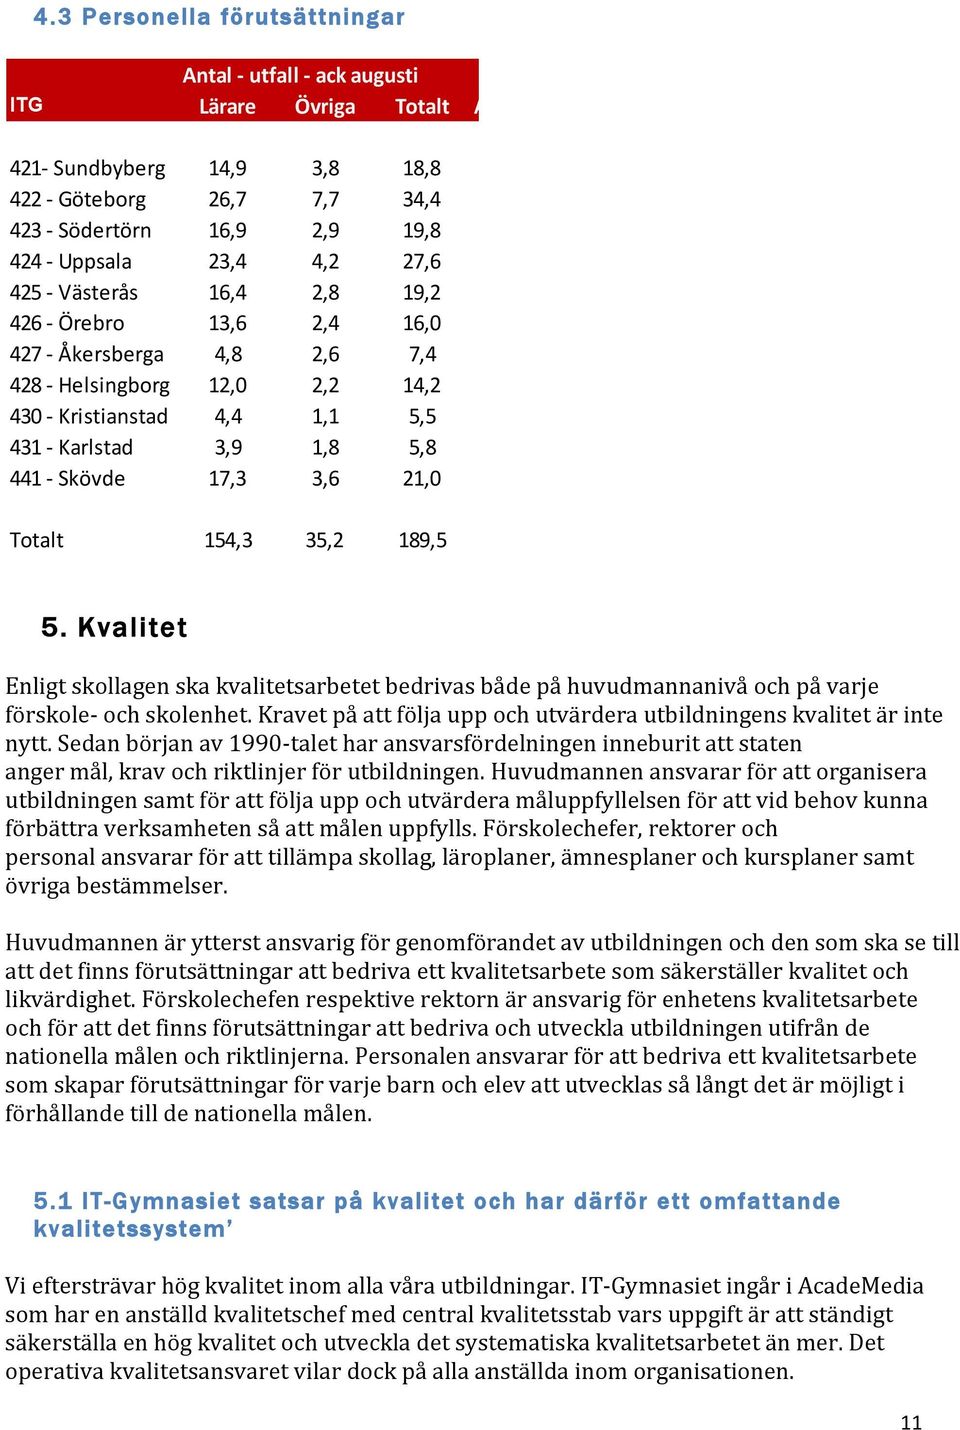 426%$%Örebro 13,6 2,4 16,0 $1,3 17,3 14,5 2,9 427%$%Åkersberga 4,8 2,6 7,4 $1,8 9,3 6,5 2,8 428%$%Helsingborg 12,0 2,2 14,2 0,1 14,0 11,7 2,3 430%$%Kristianstad 4,4 1,1 5,5 0,5 5,0 4,0 1,0